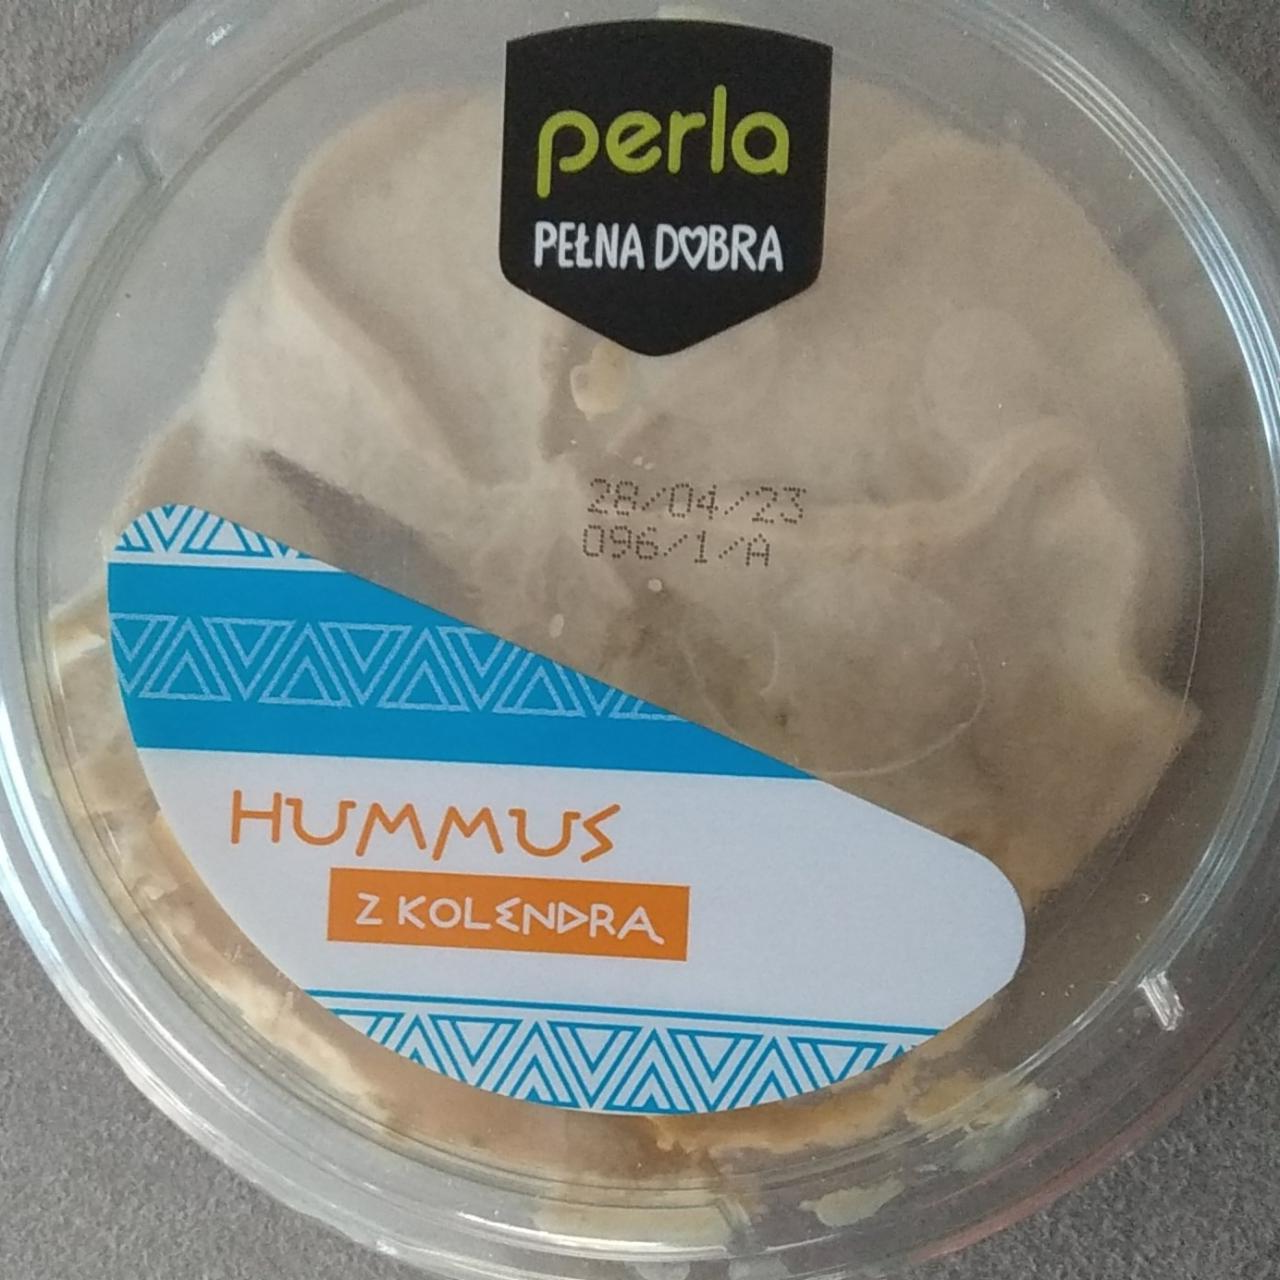 Zdjęcia - Hummus z kolendrą Perla